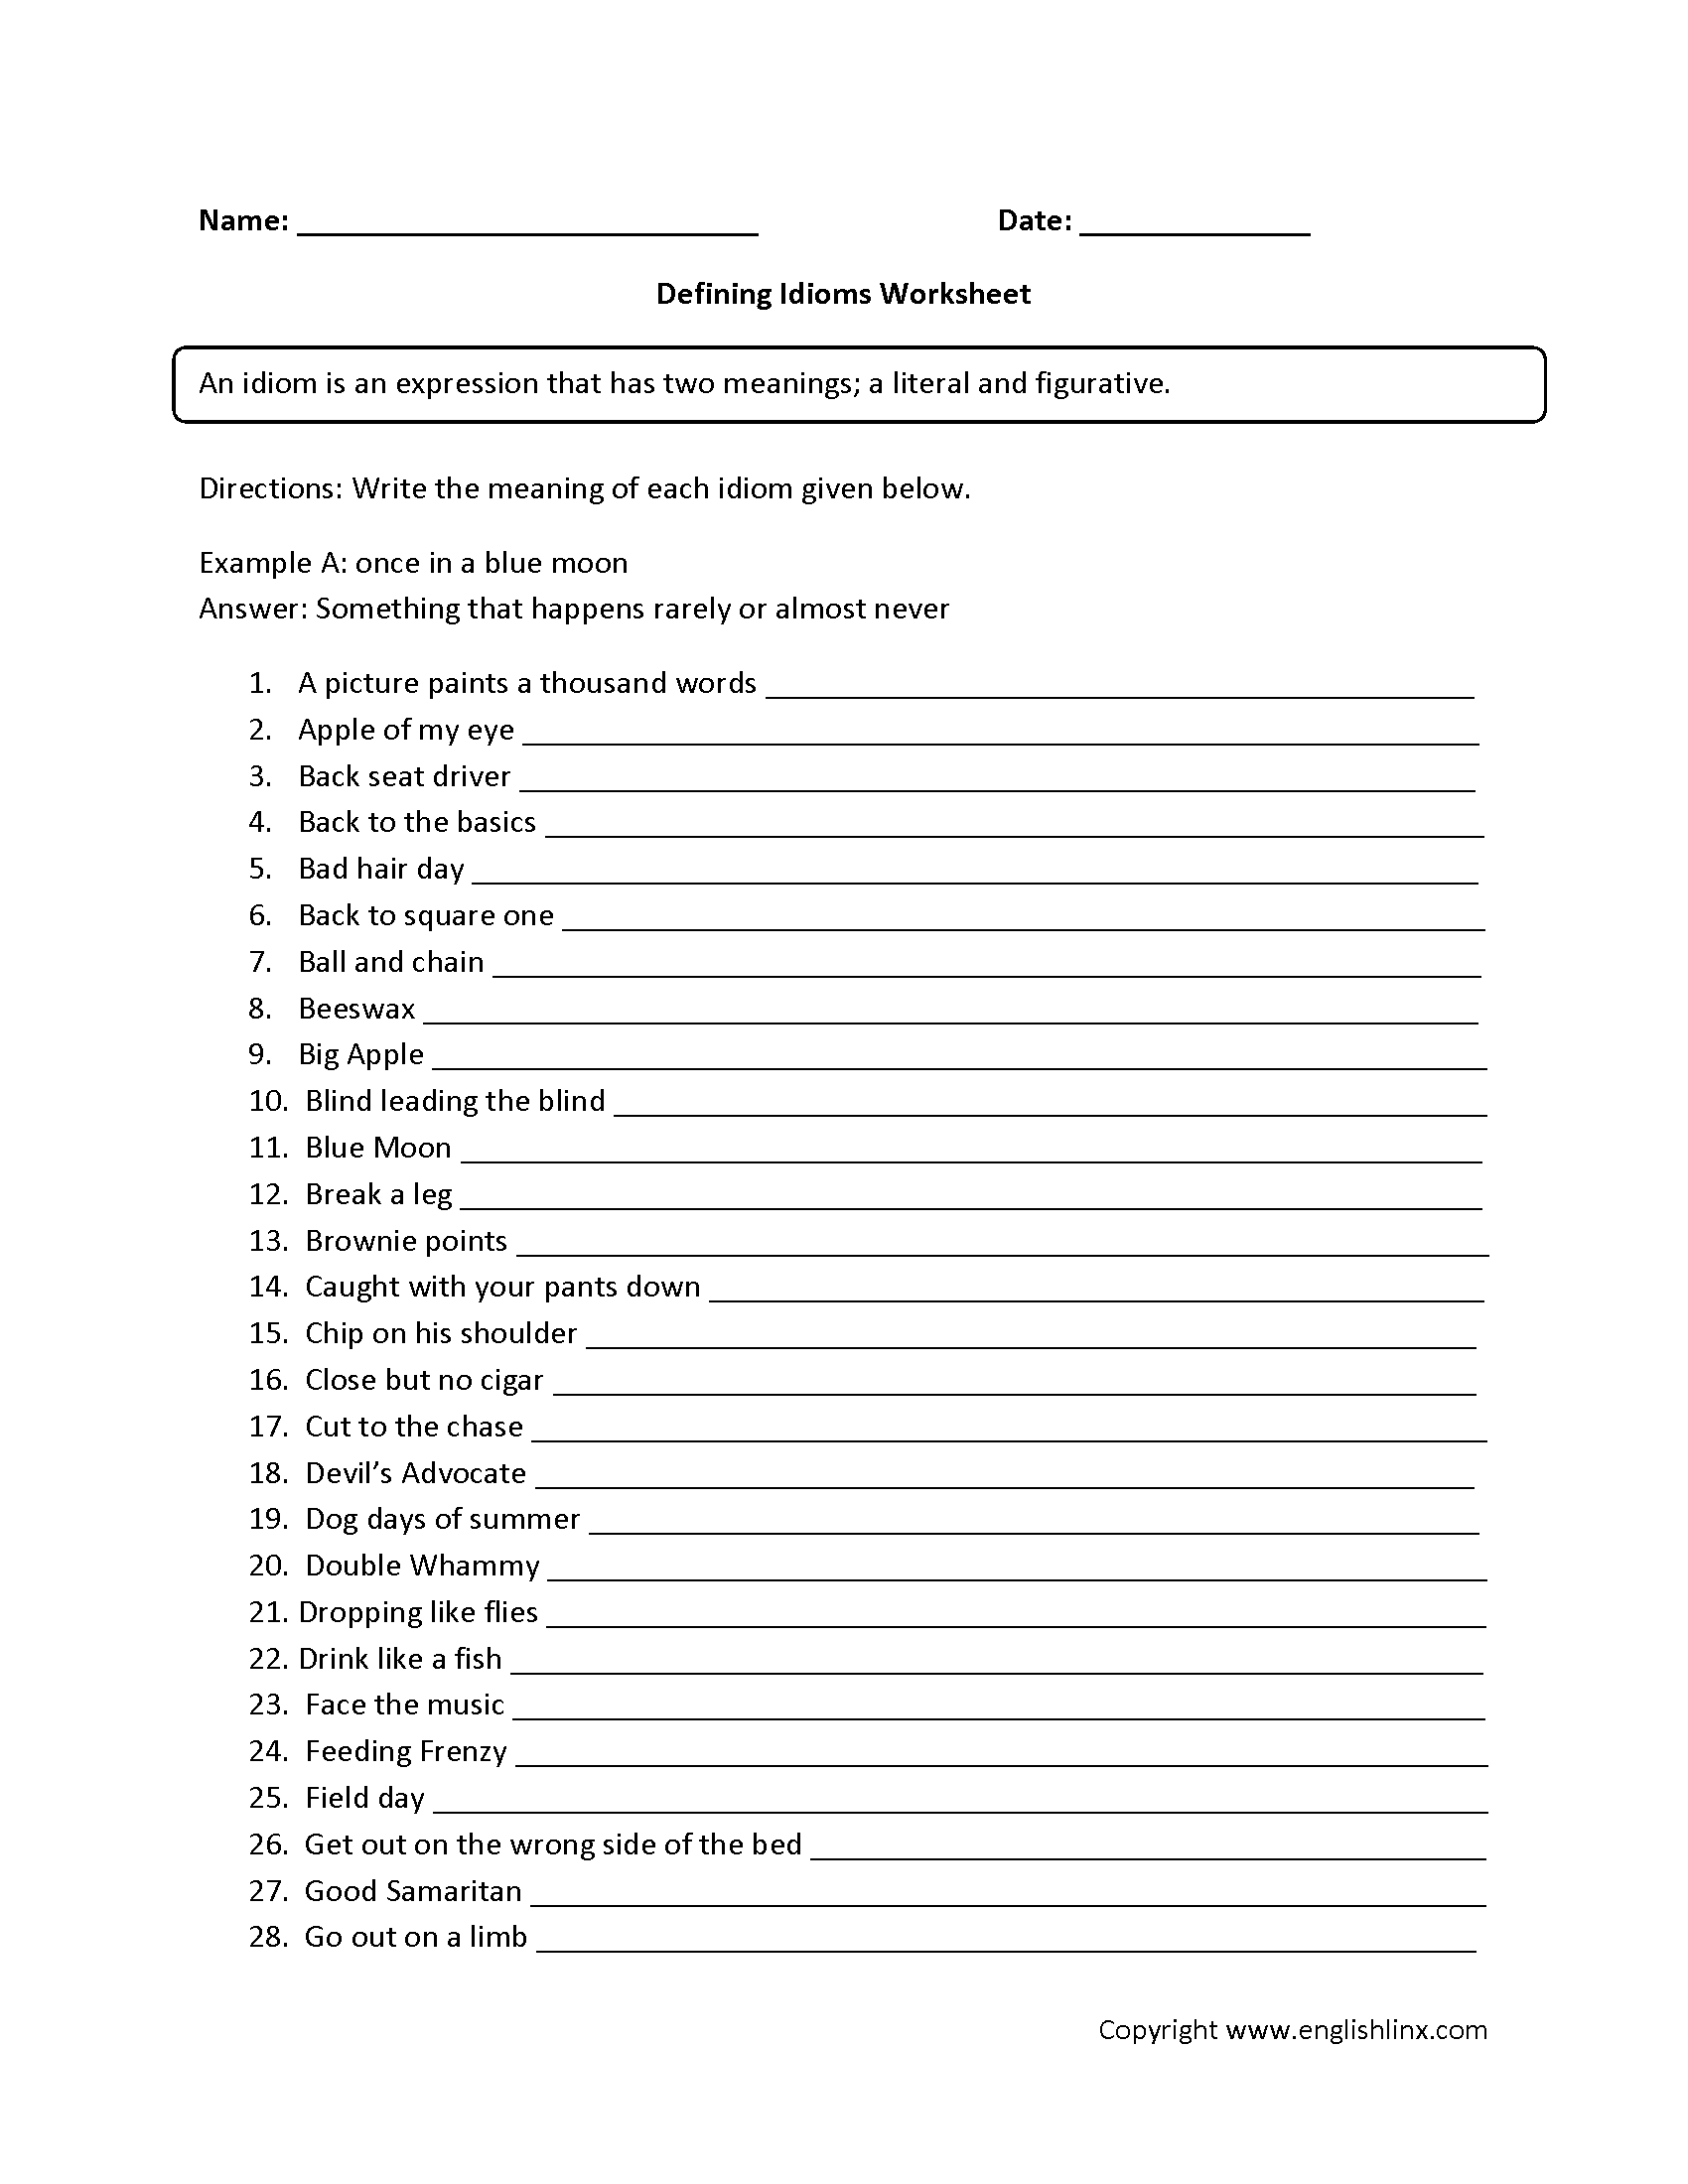 Defining Idioms Worksheets